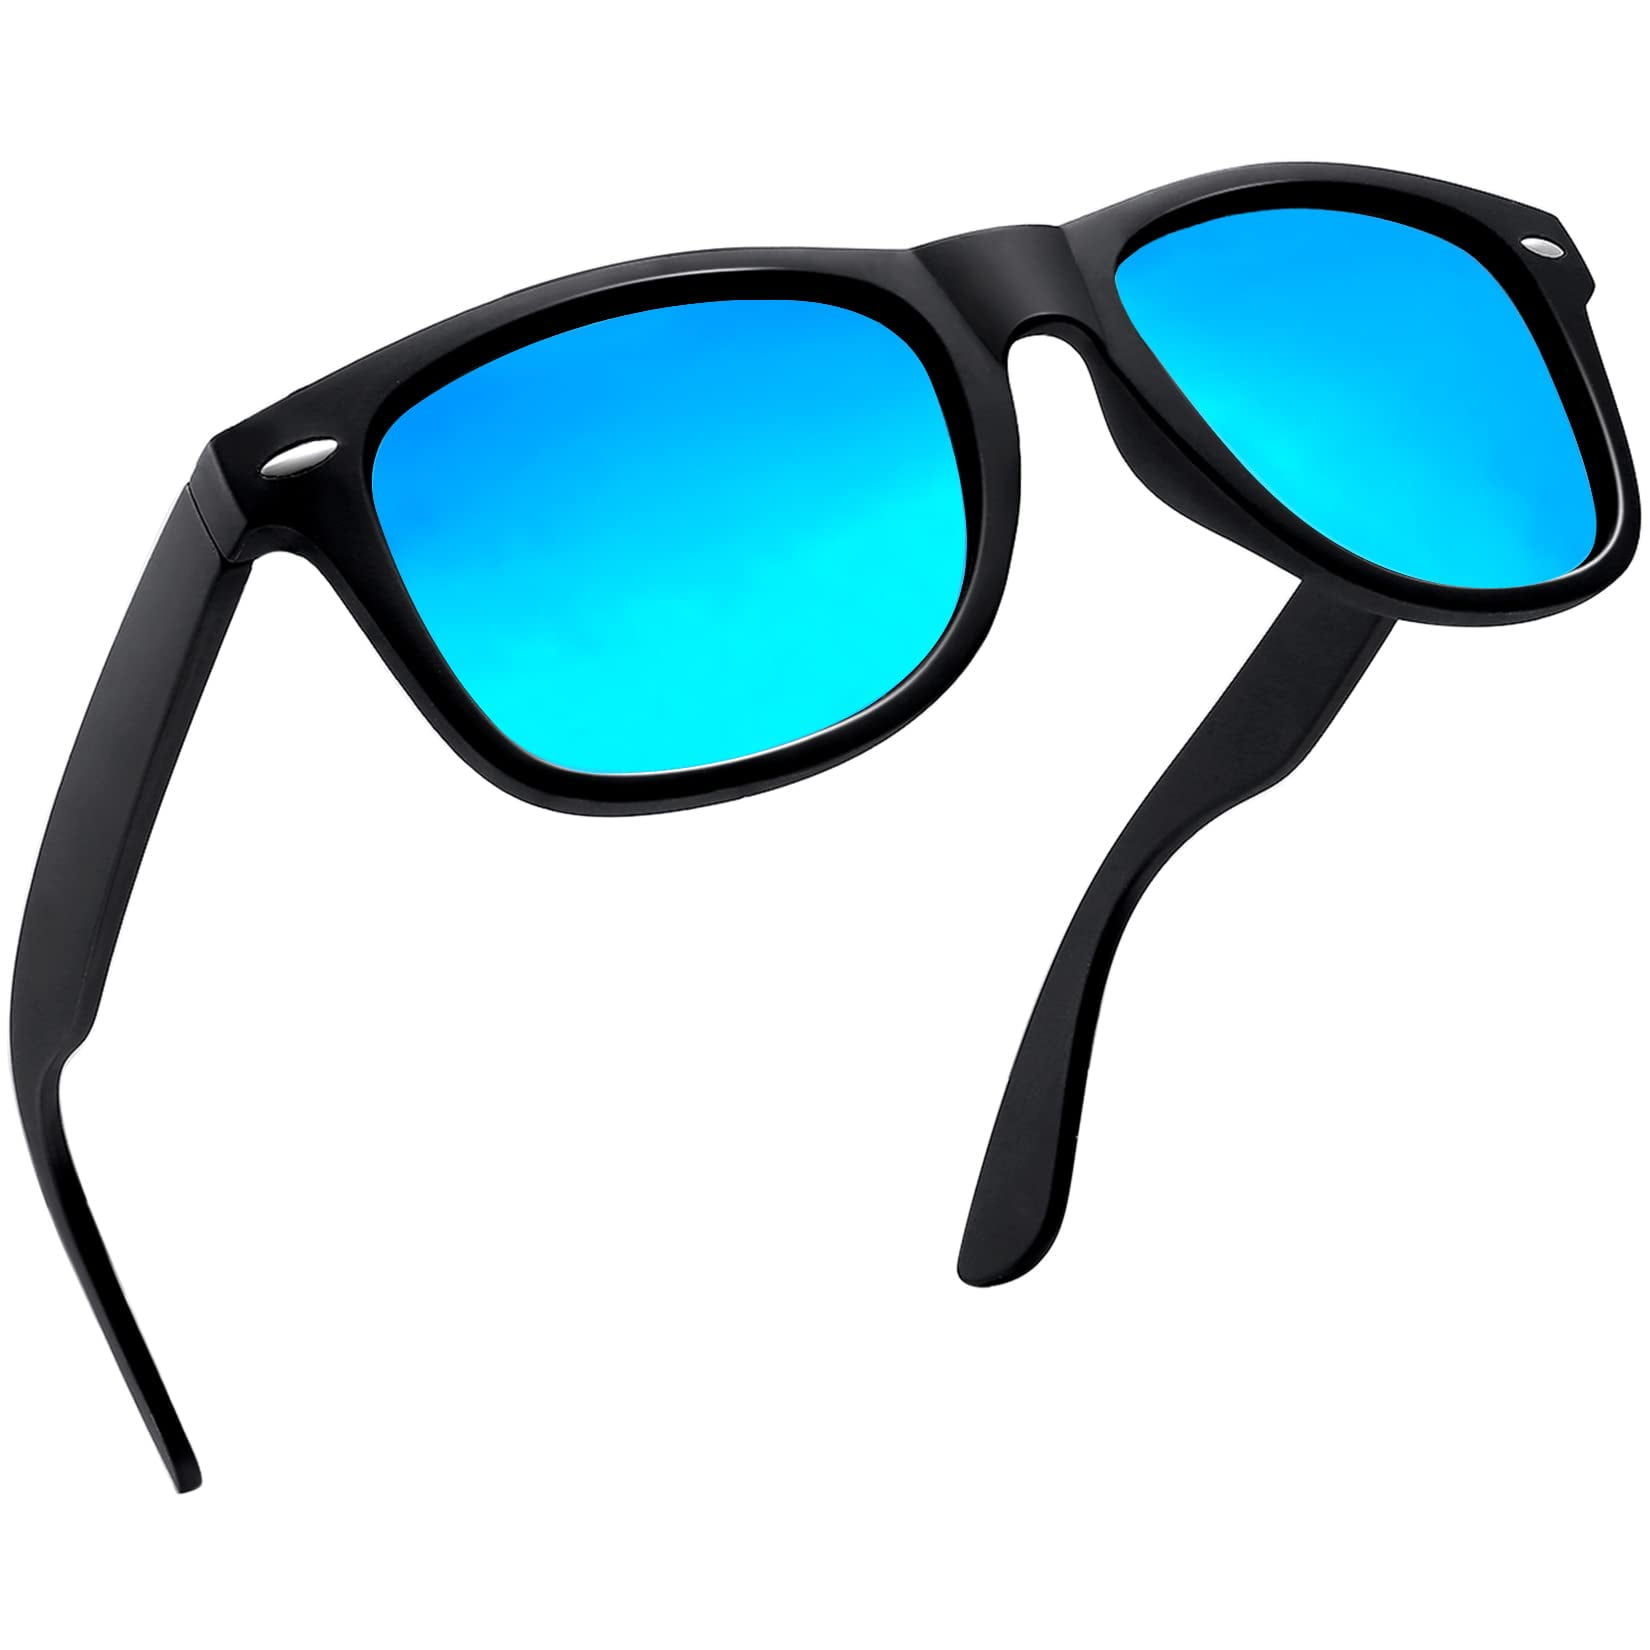 Torneado Parte princesa Men's Polarized Sports Sunglasses, Retro Sun Glasses for Men Women Driving  Fishing 100% UV Protection(Matte Black) - Walmart.com